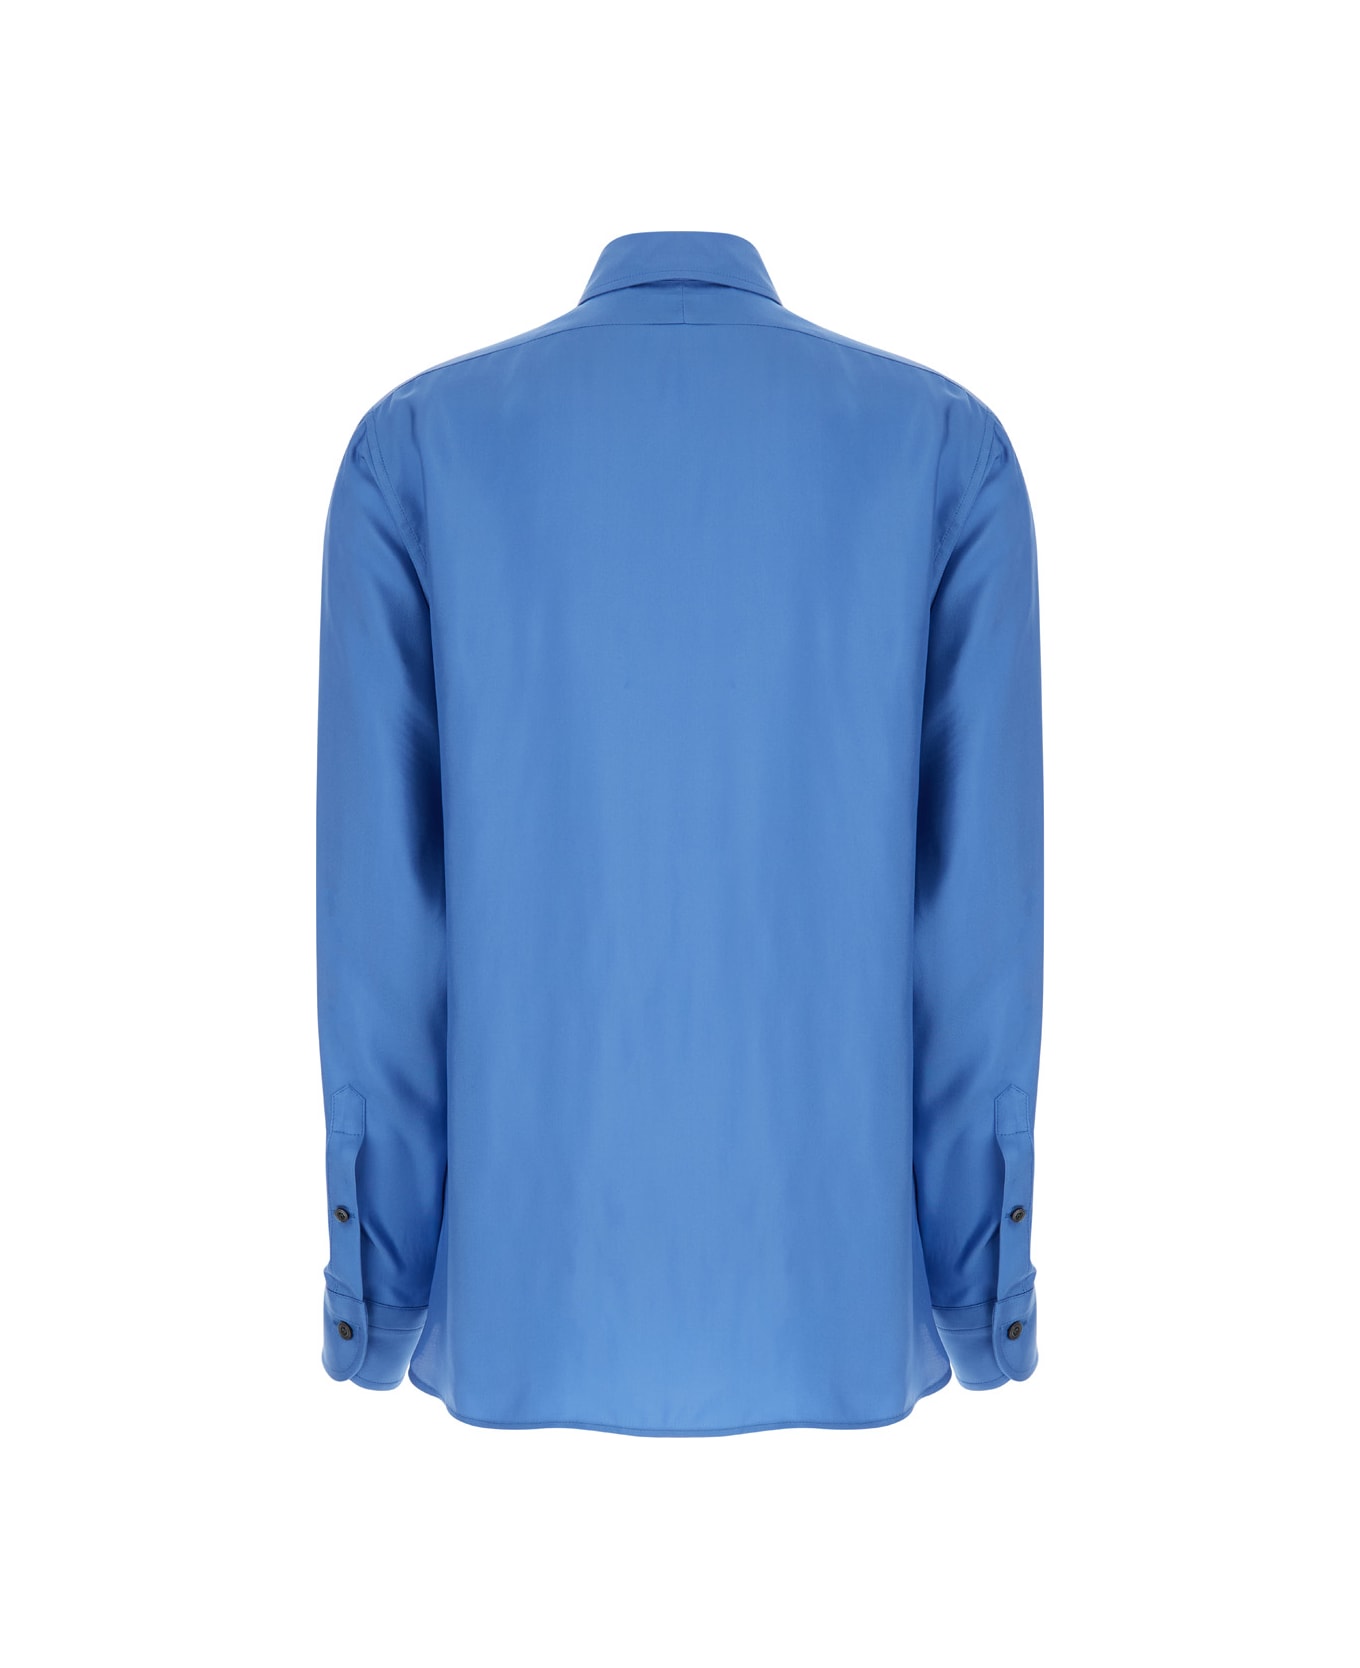 Tom Ford Pleated Plastron Shirt - Blu